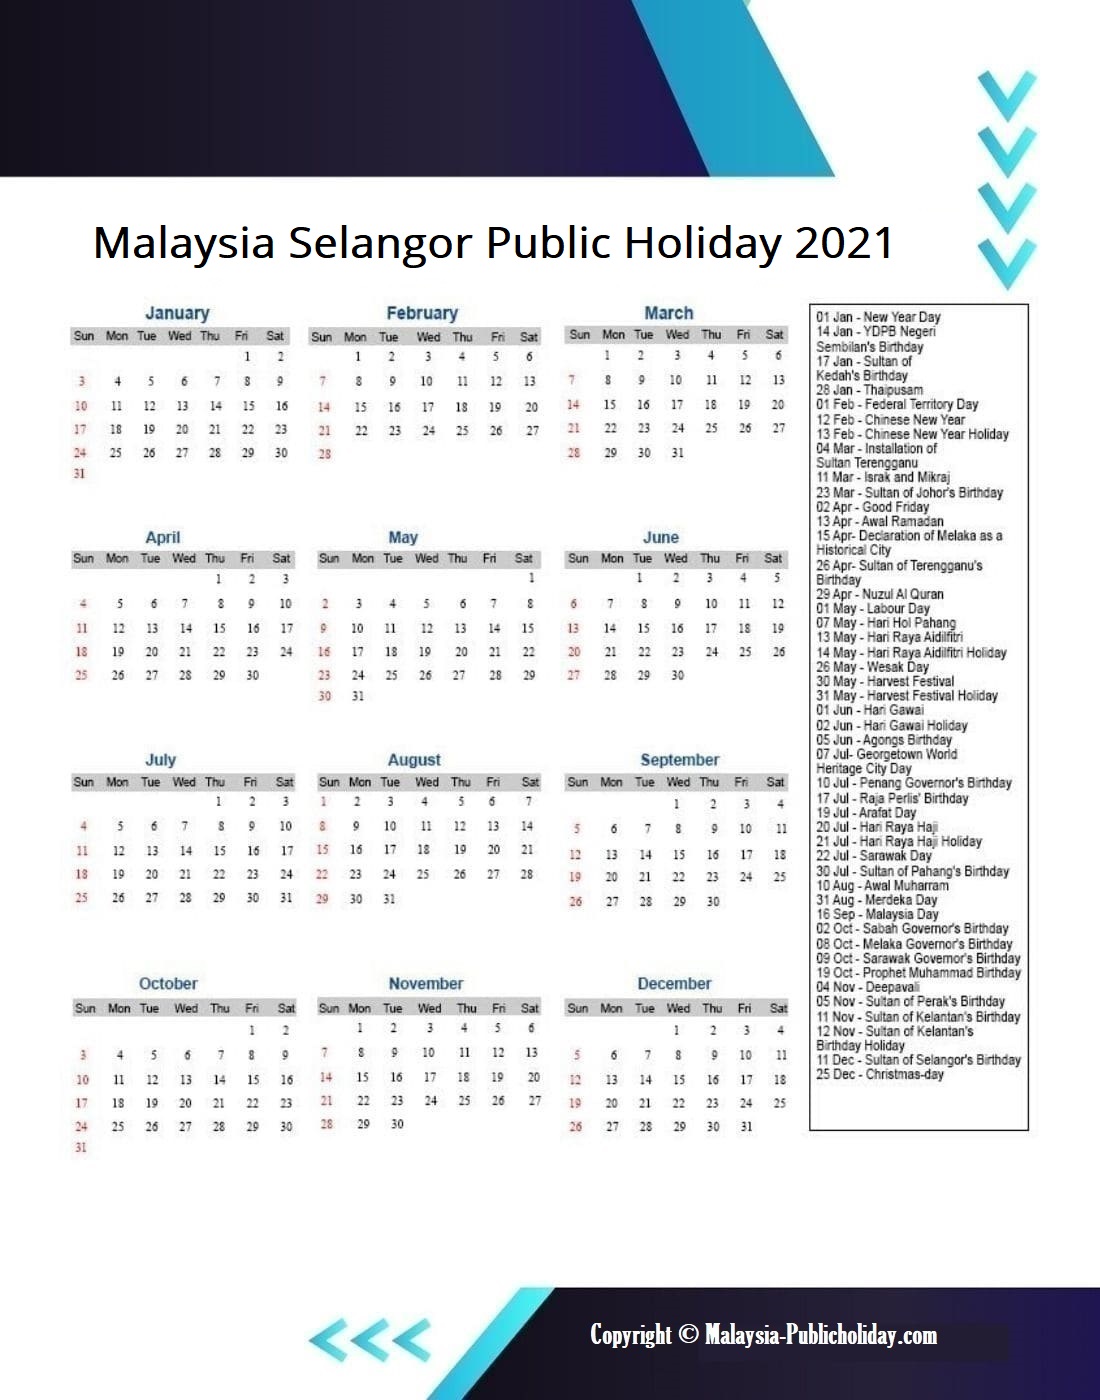 Holiday selangor 2022 public Upcoming Selangor